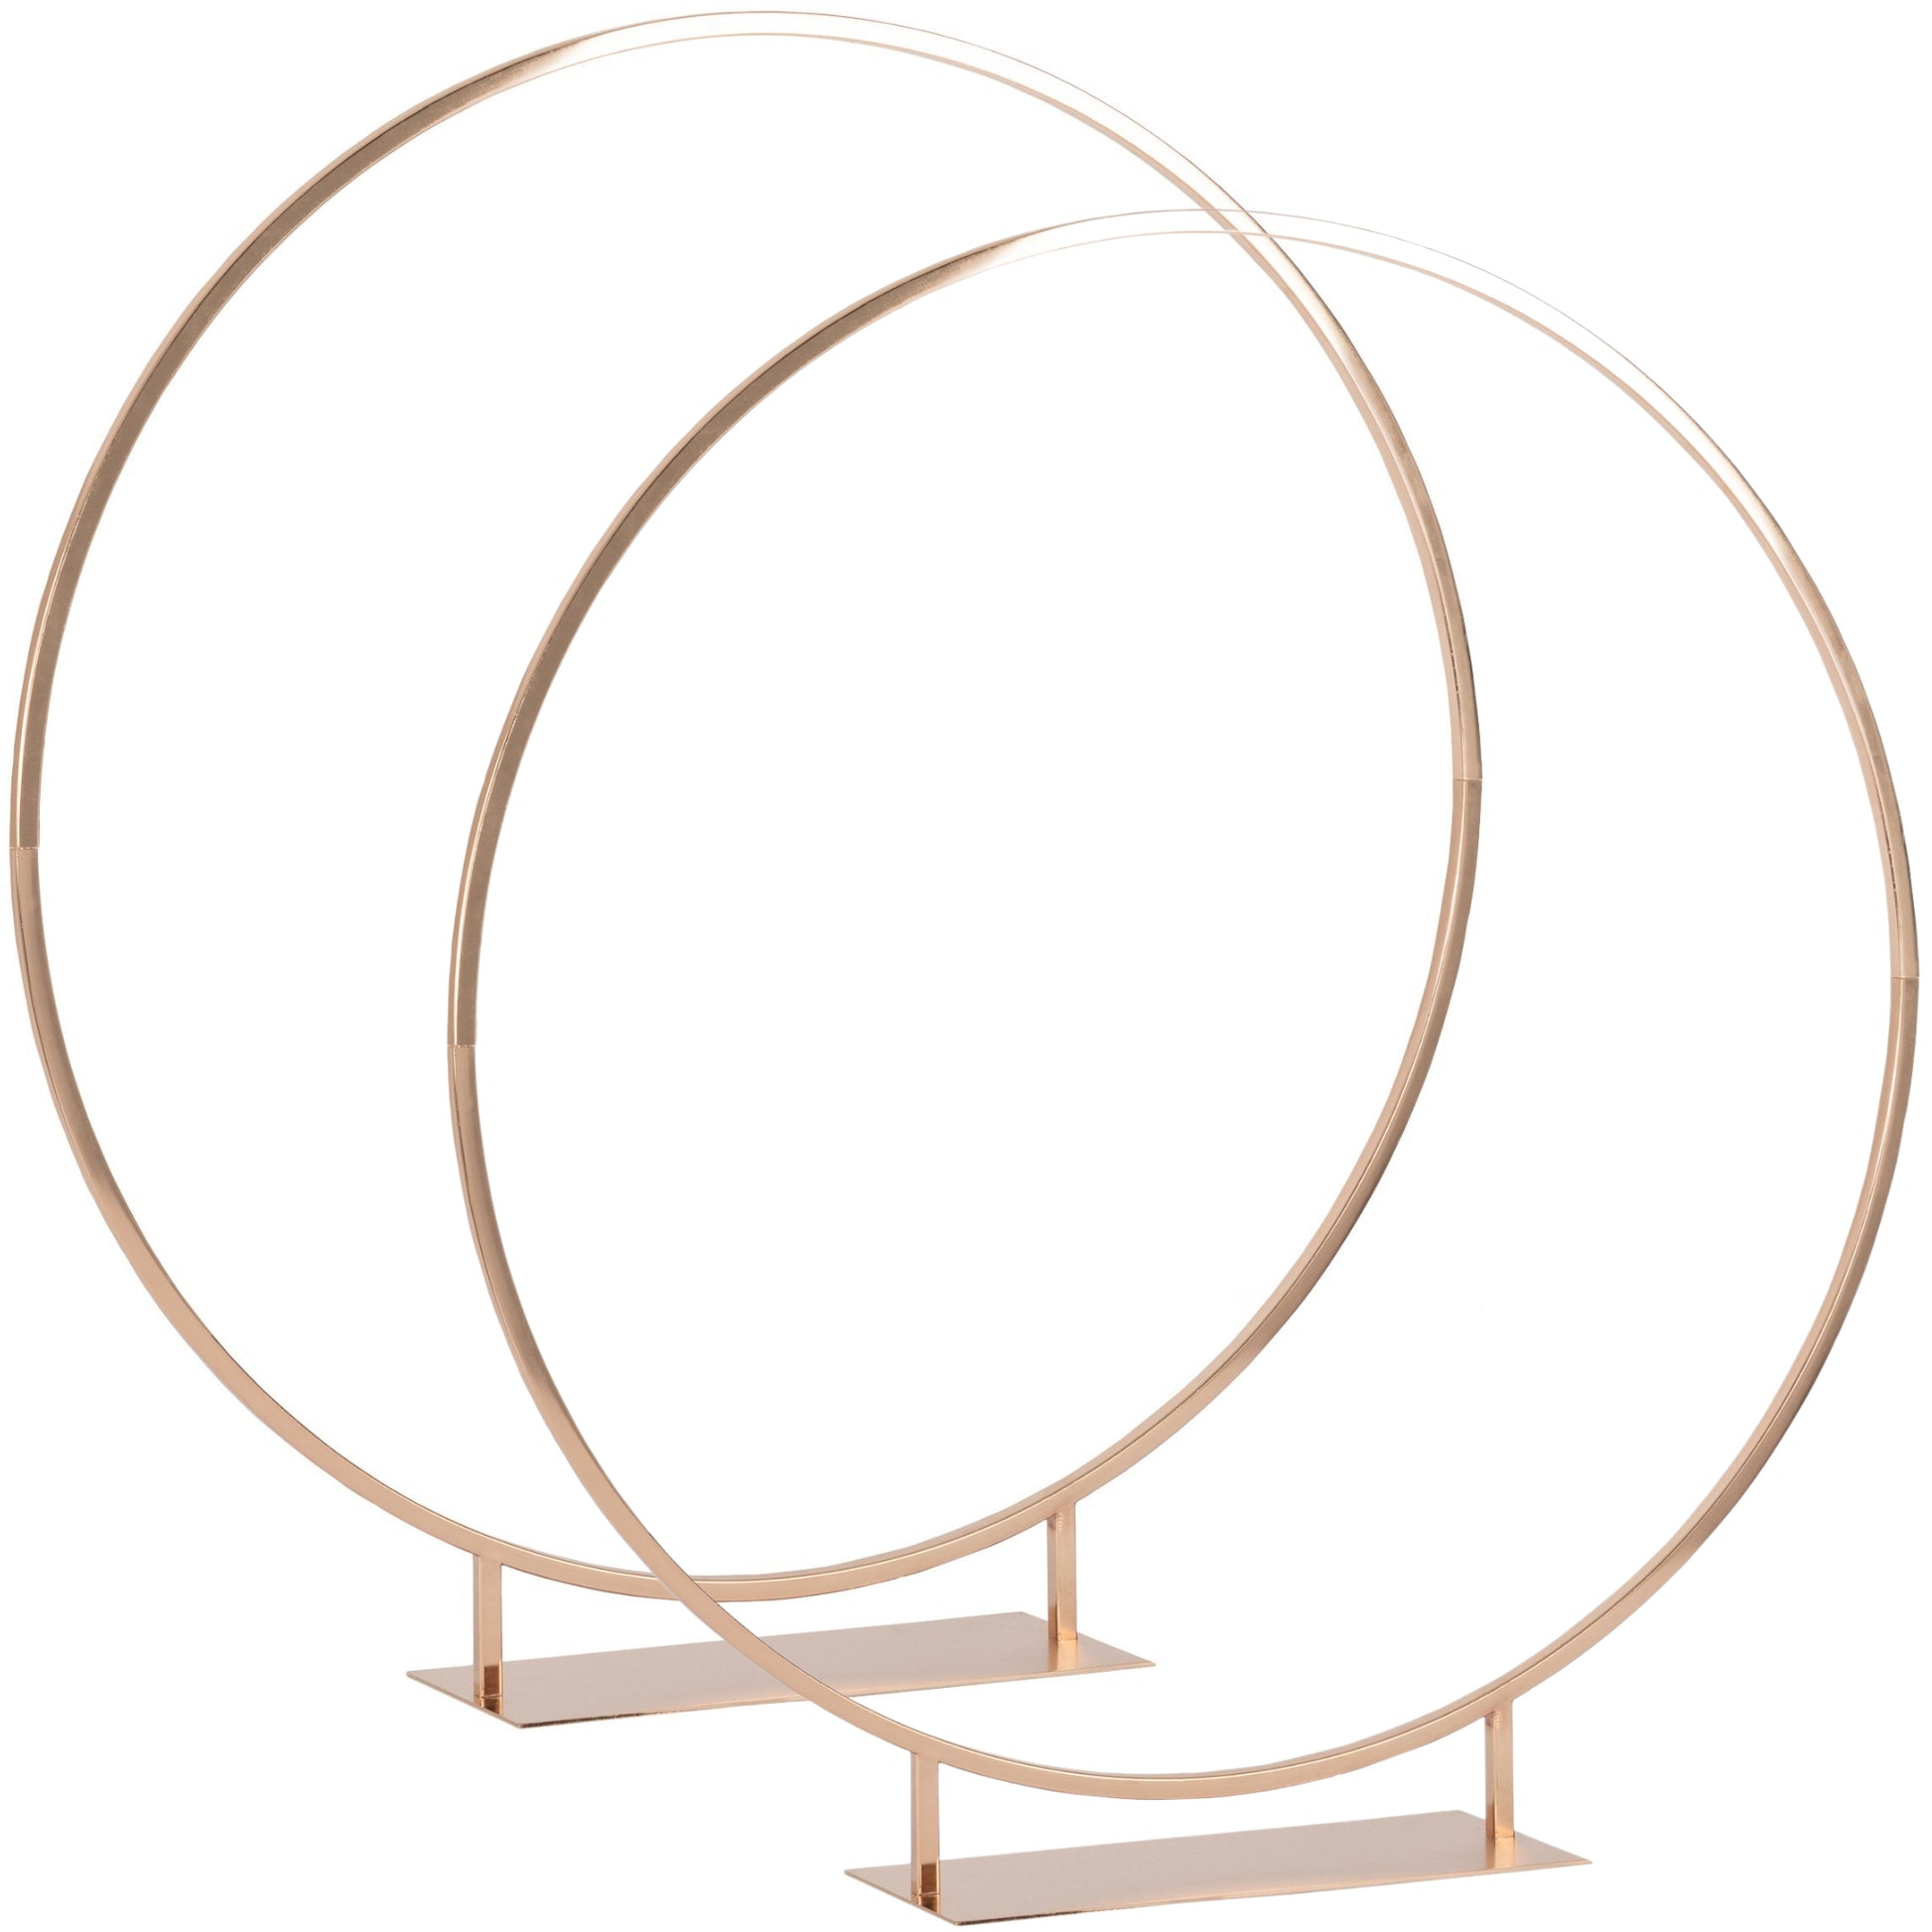 Pack of 2 pcs Metal Round Arch Hoop Tabletop Decor Centerpiece 32" Diameter - Gold